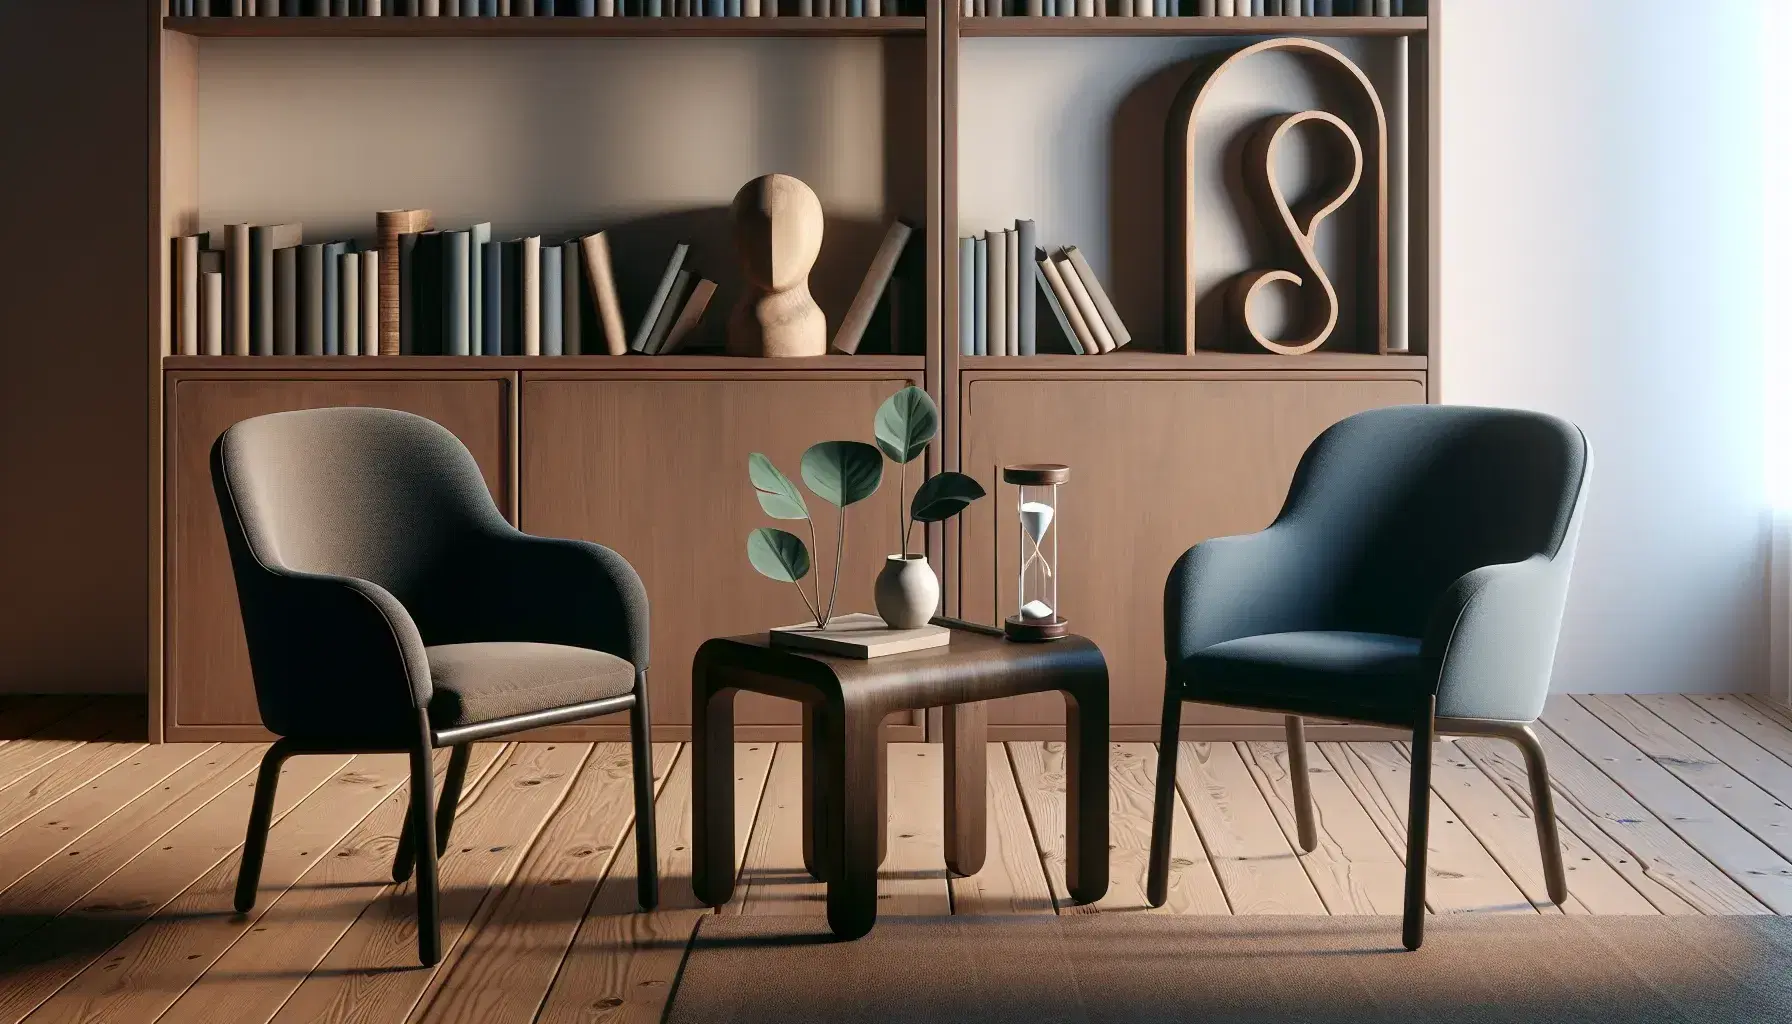 Sala de consulta psiquiátrica con dos sillas azul oscuro frente a frente, mesa de madera con planta y reloj de arena, y estantería repleta de libros.